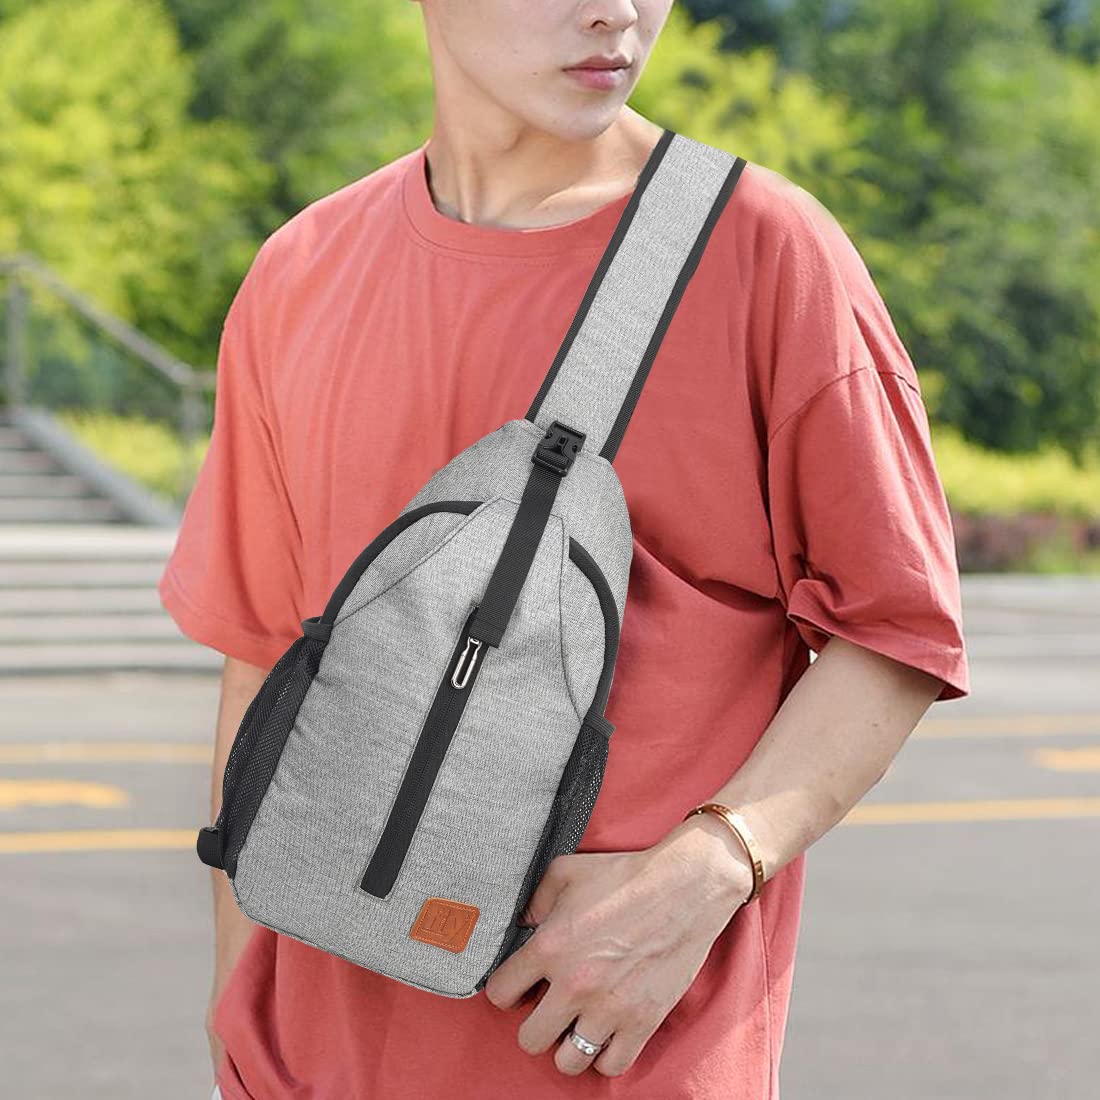 Fly Fashion Polyester Travel Cross Body Backpack Shoulder Chest Bag Lightweight Men Women (Grey)